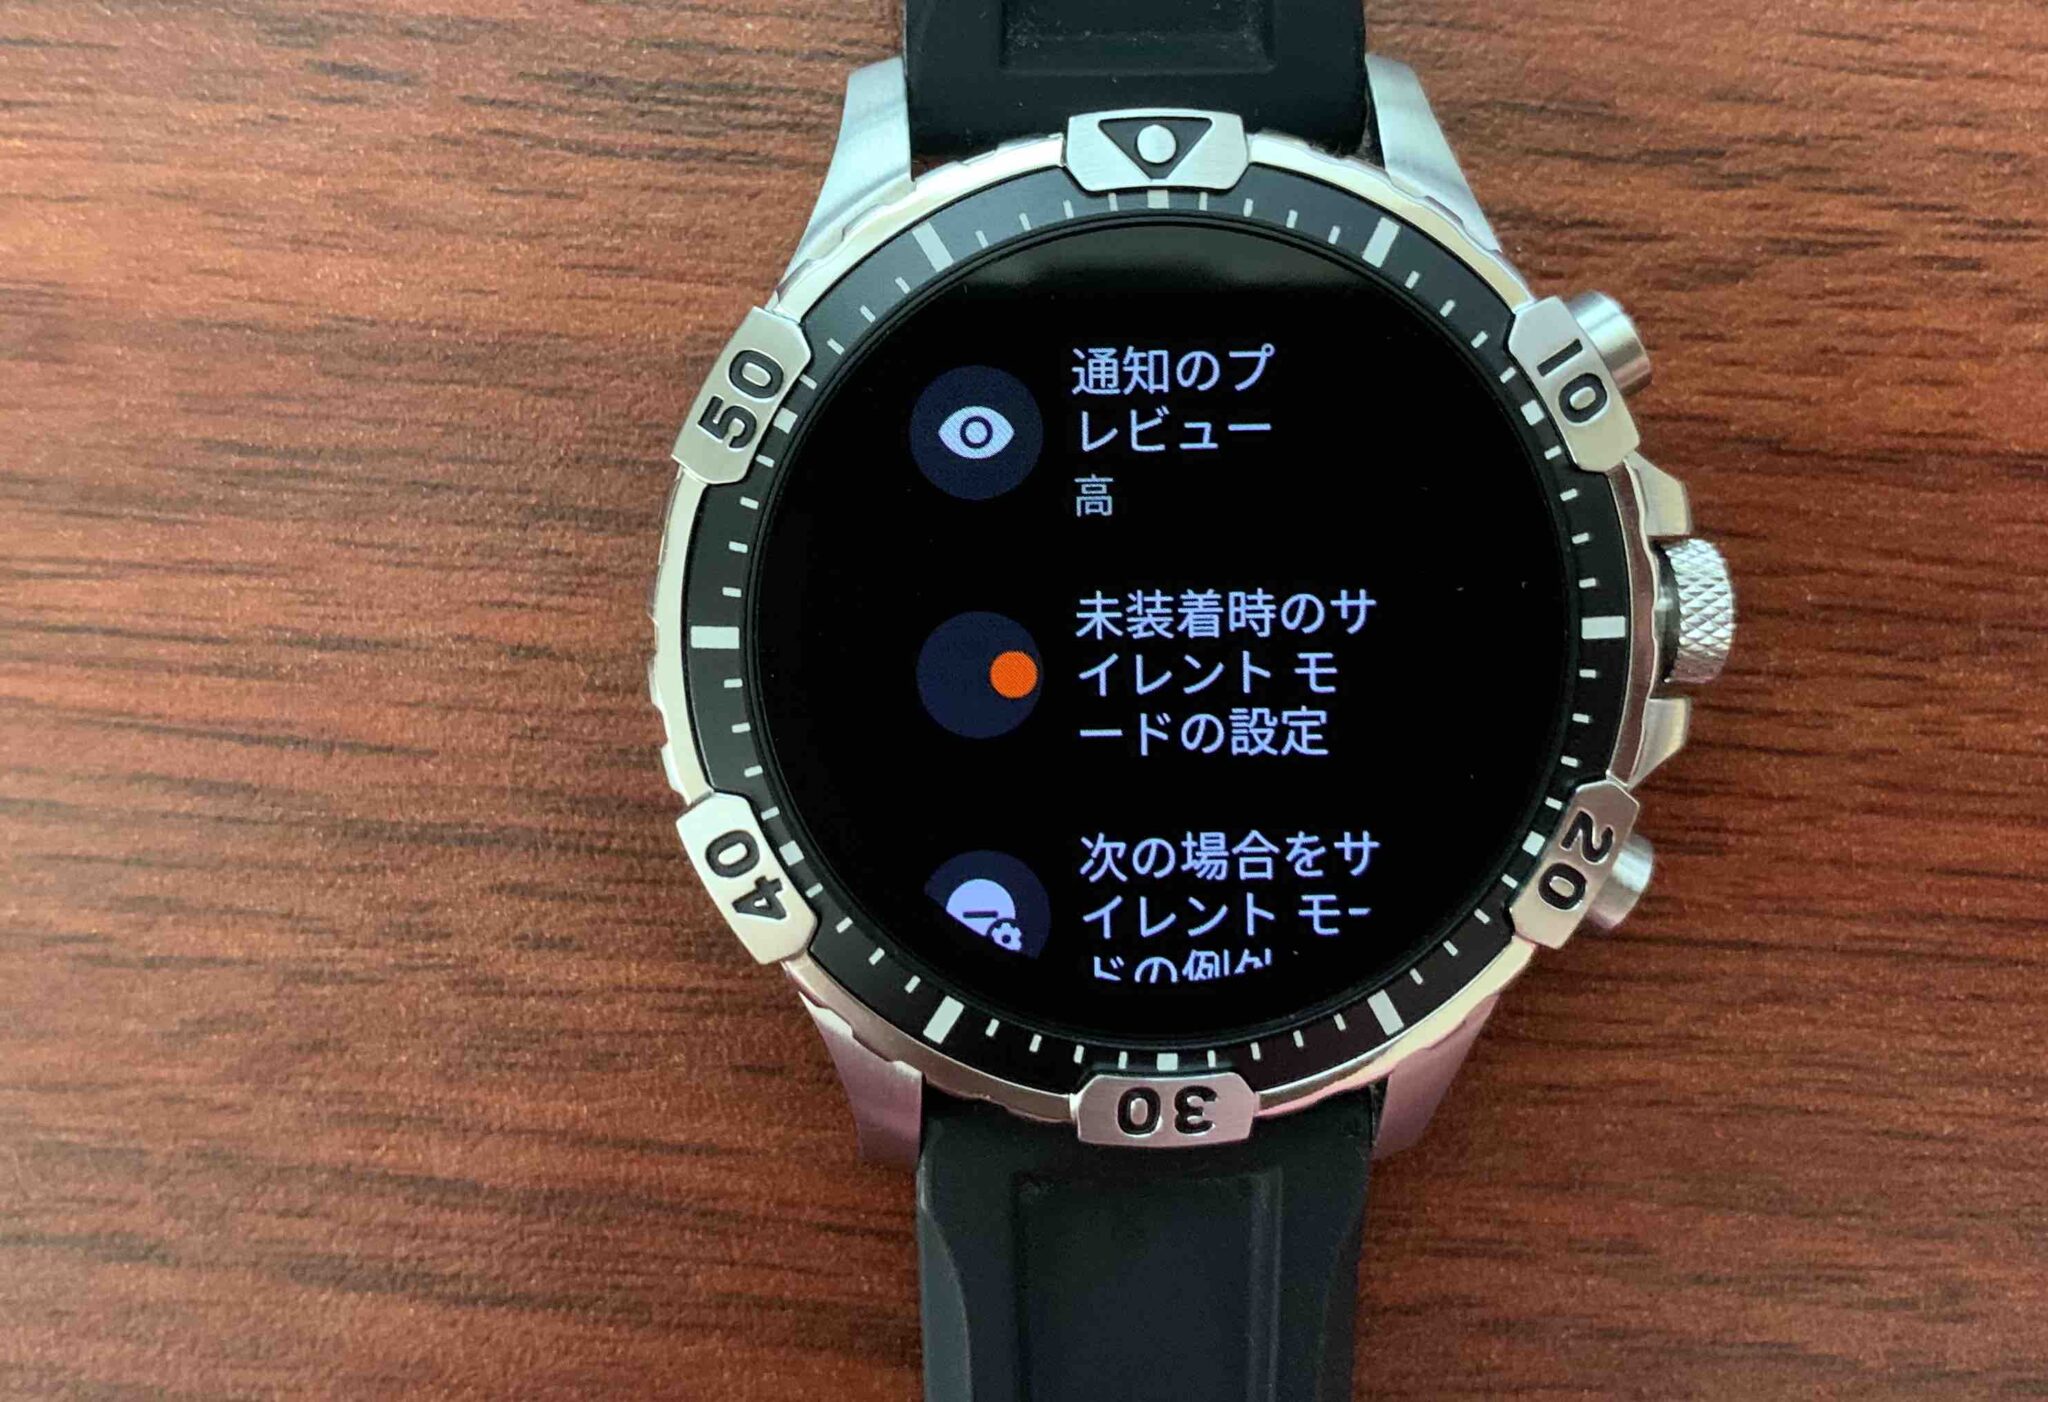 Wear OSスマートウォッチの「未着用時のサイレントモード」が便利！ - Smart Watch Life｜日本初のスマートウォッチ専門メディア